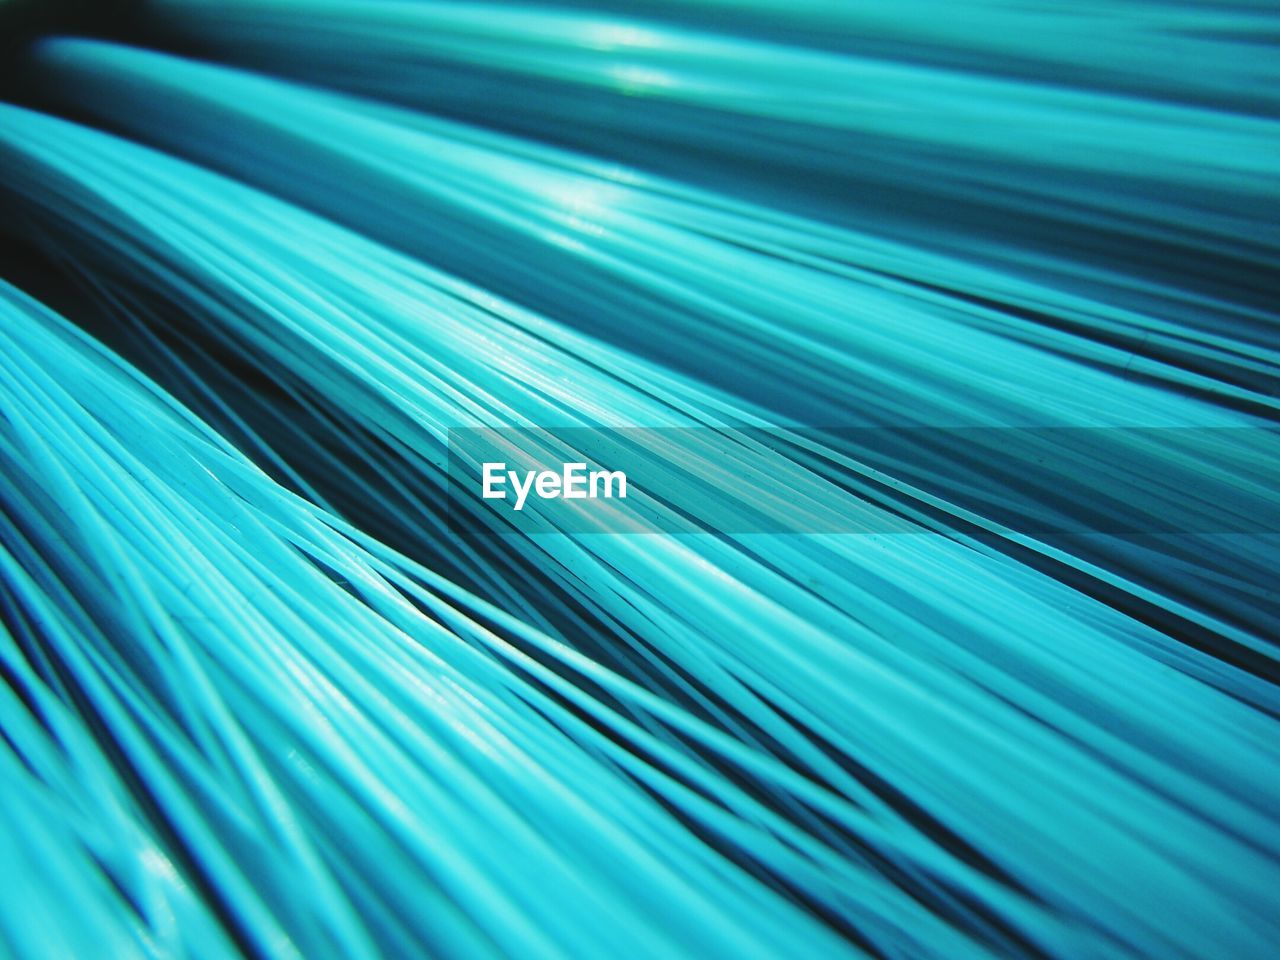 View of fiber optics